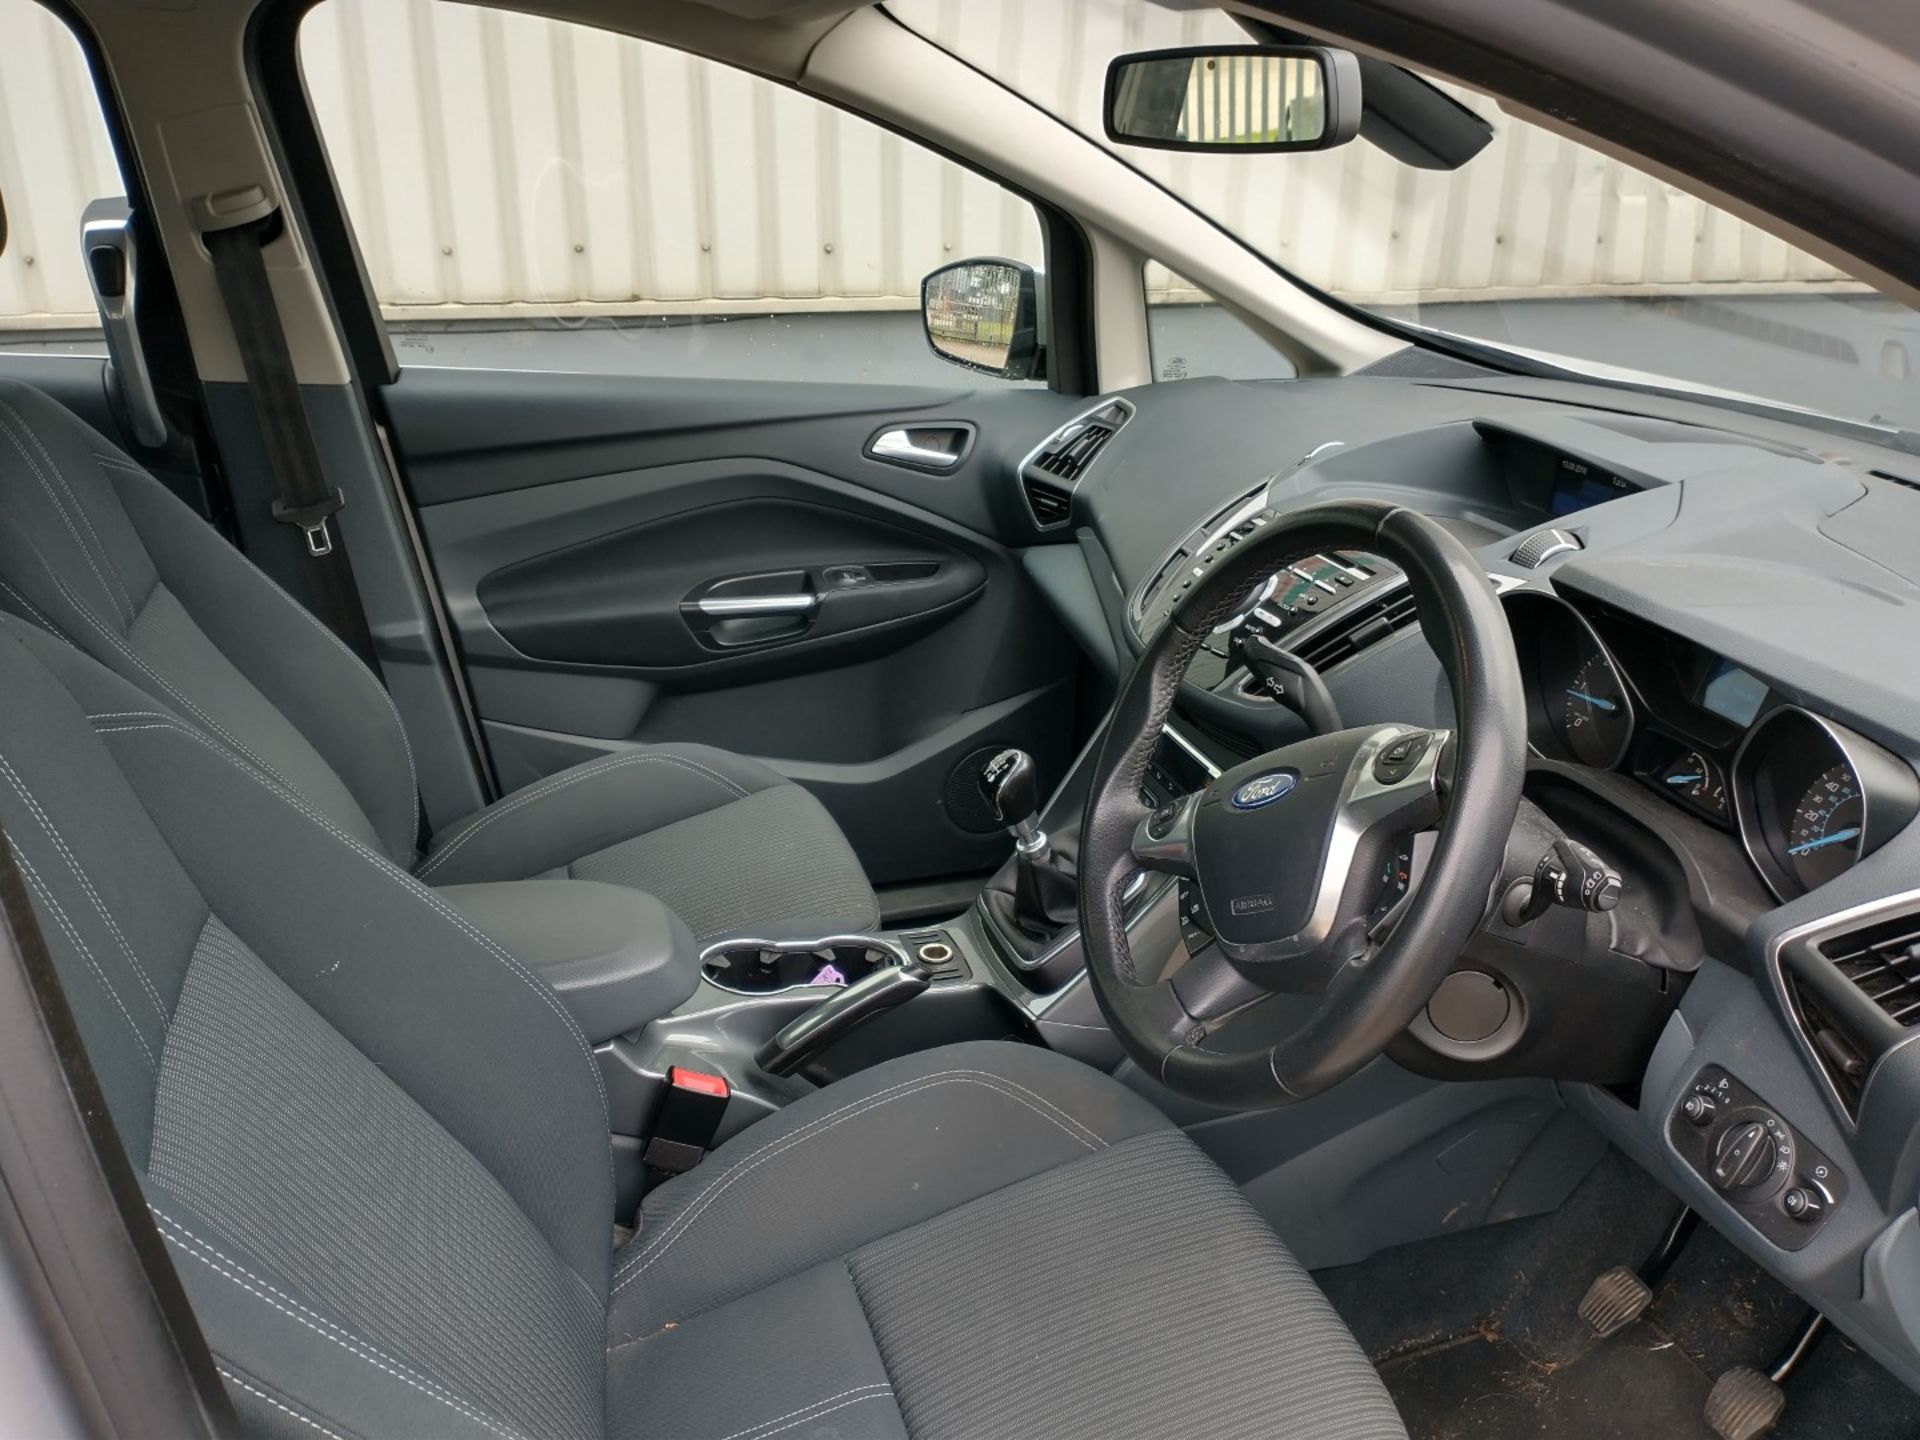 2012 Ford Grand C-Max Titanium Tdci 115 7 Seat MPV - CL505 - Ref: VVS0002 - NO VAT ON THE HAMMER - L - Image 3 of 20